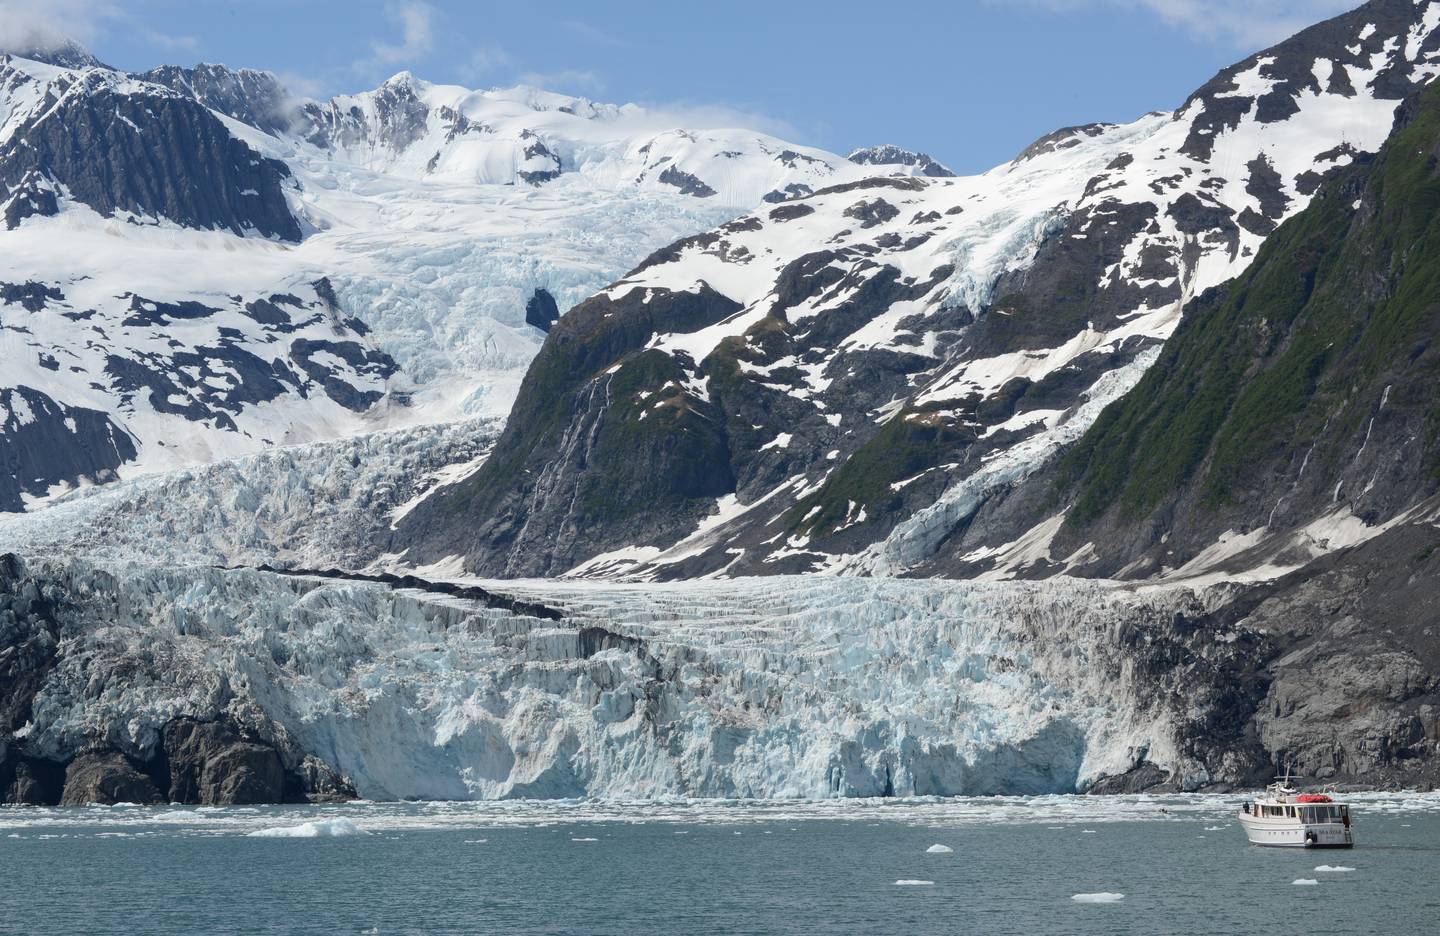 many glacier tours